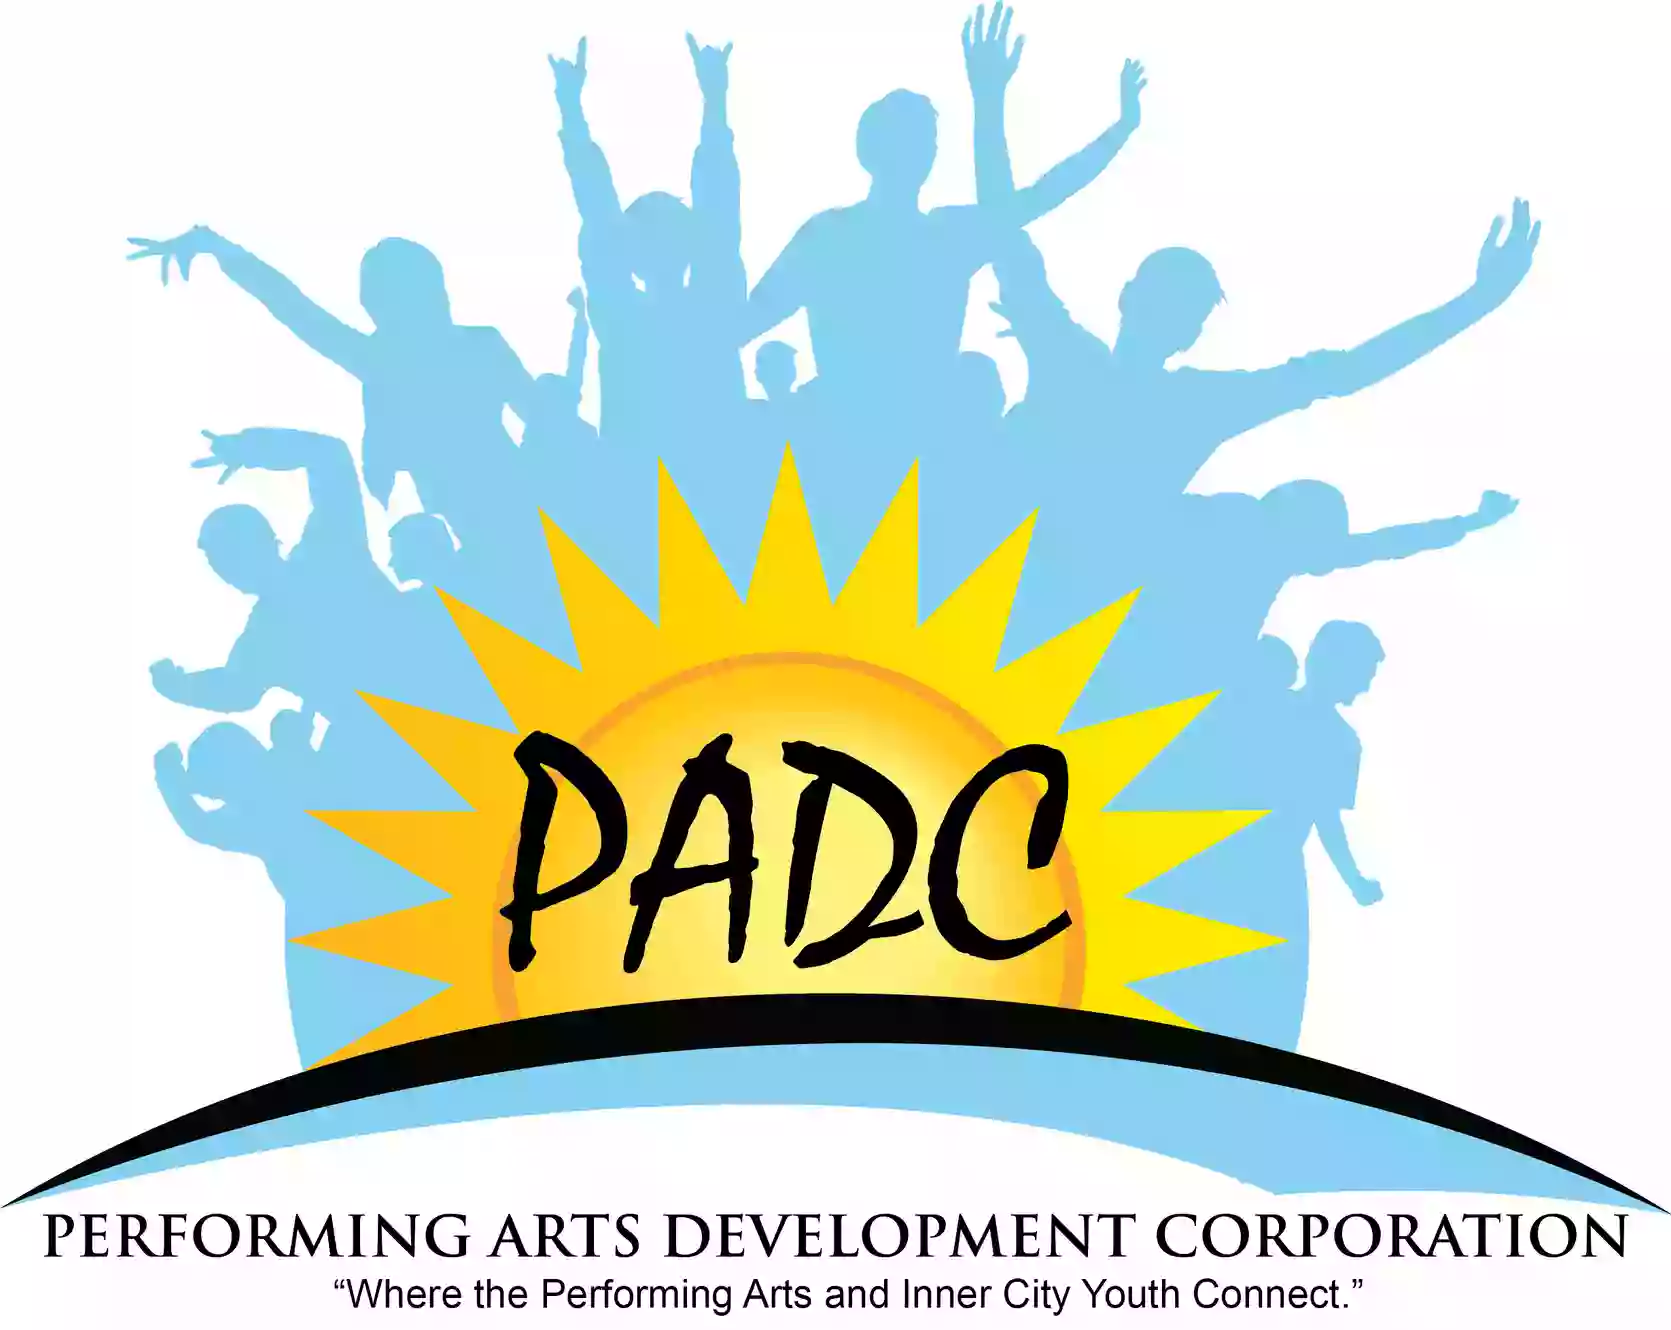 The Performing Arts Development Corporation